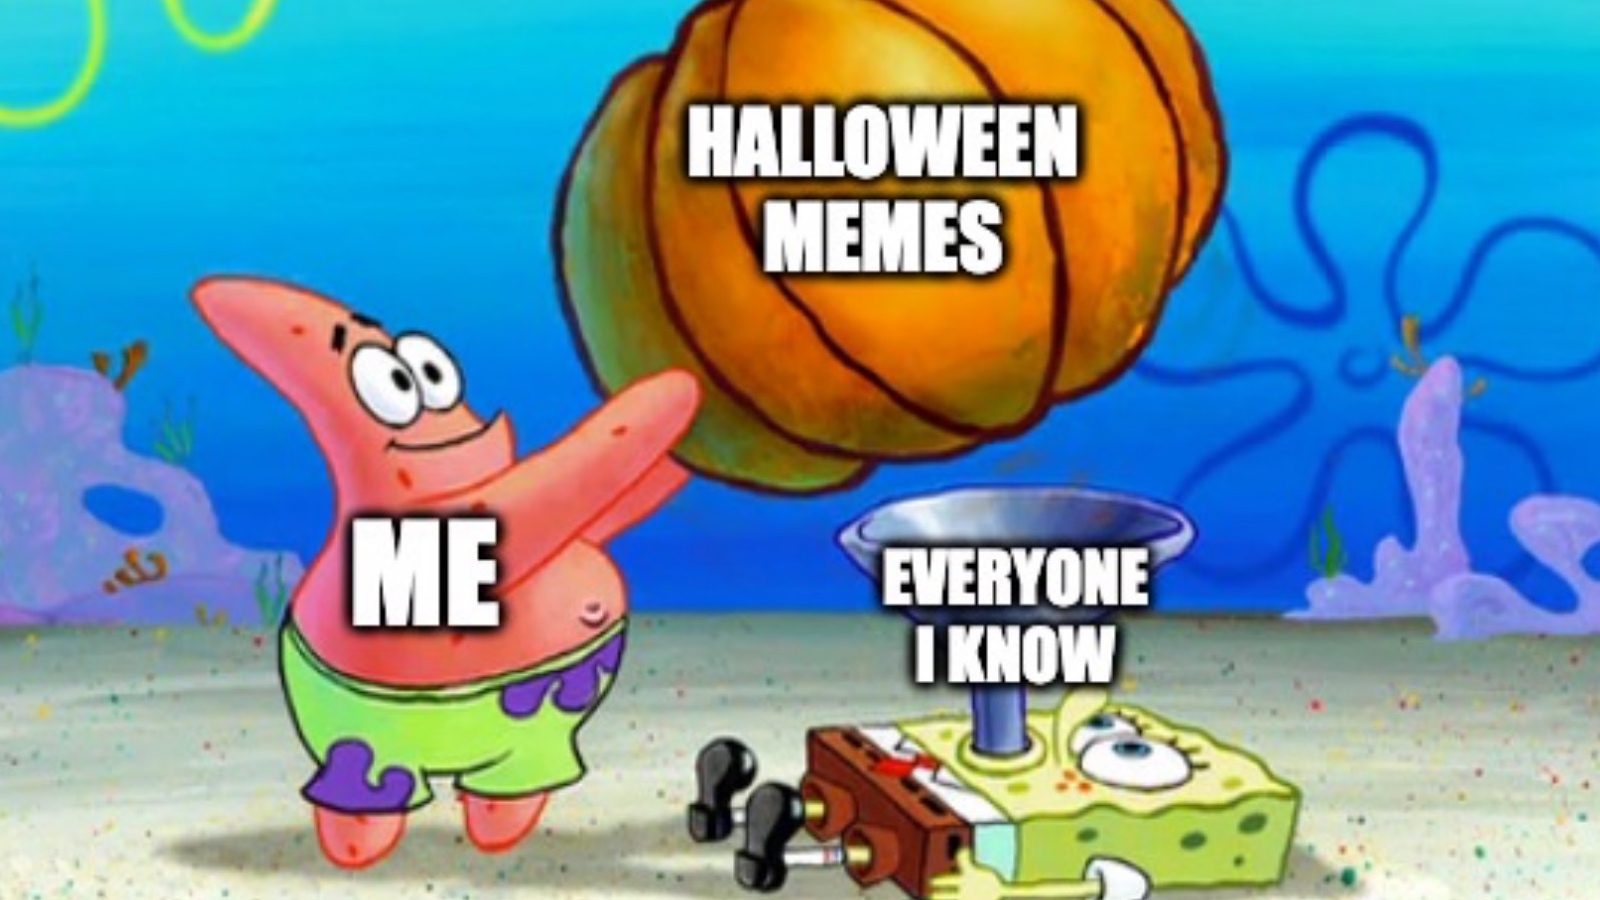 Halloween memes Spongebob Squarepants 